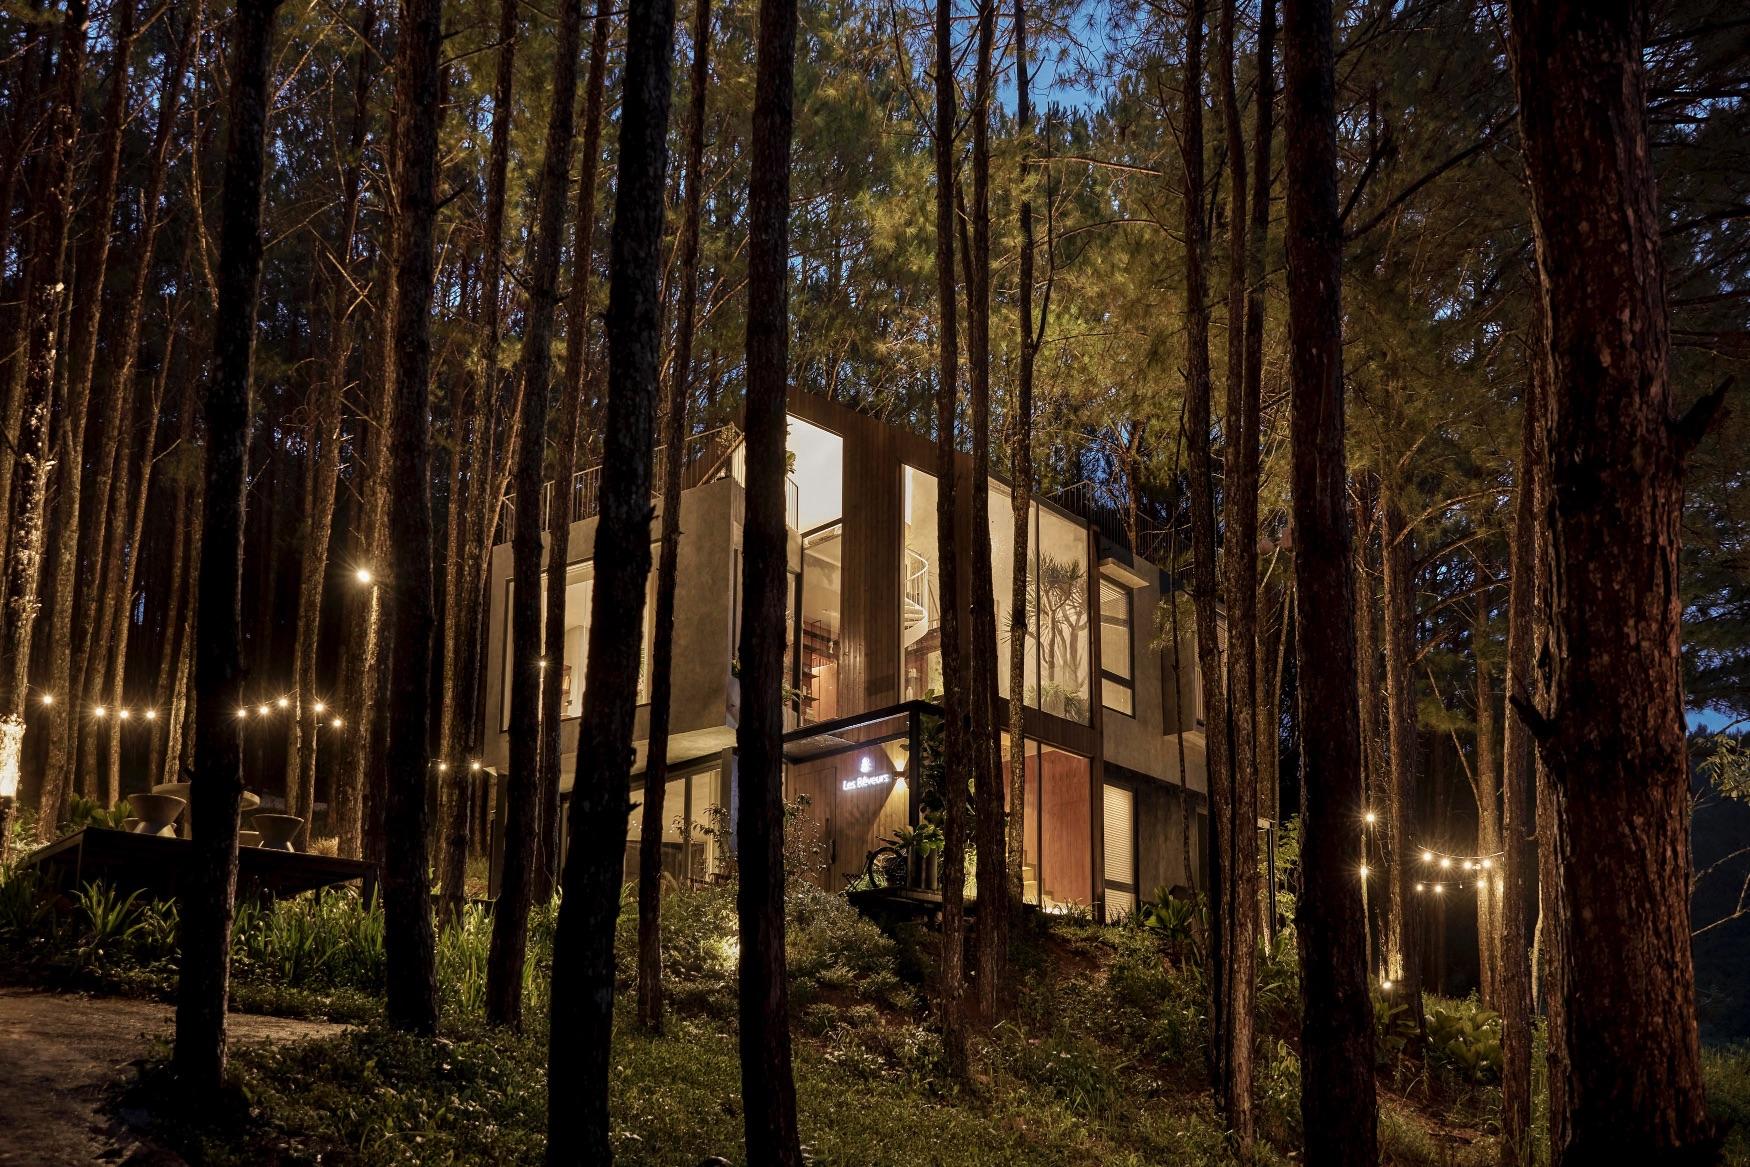 Inside the dream-like retreat hidden in the pine forest of Dalat, Vietnam